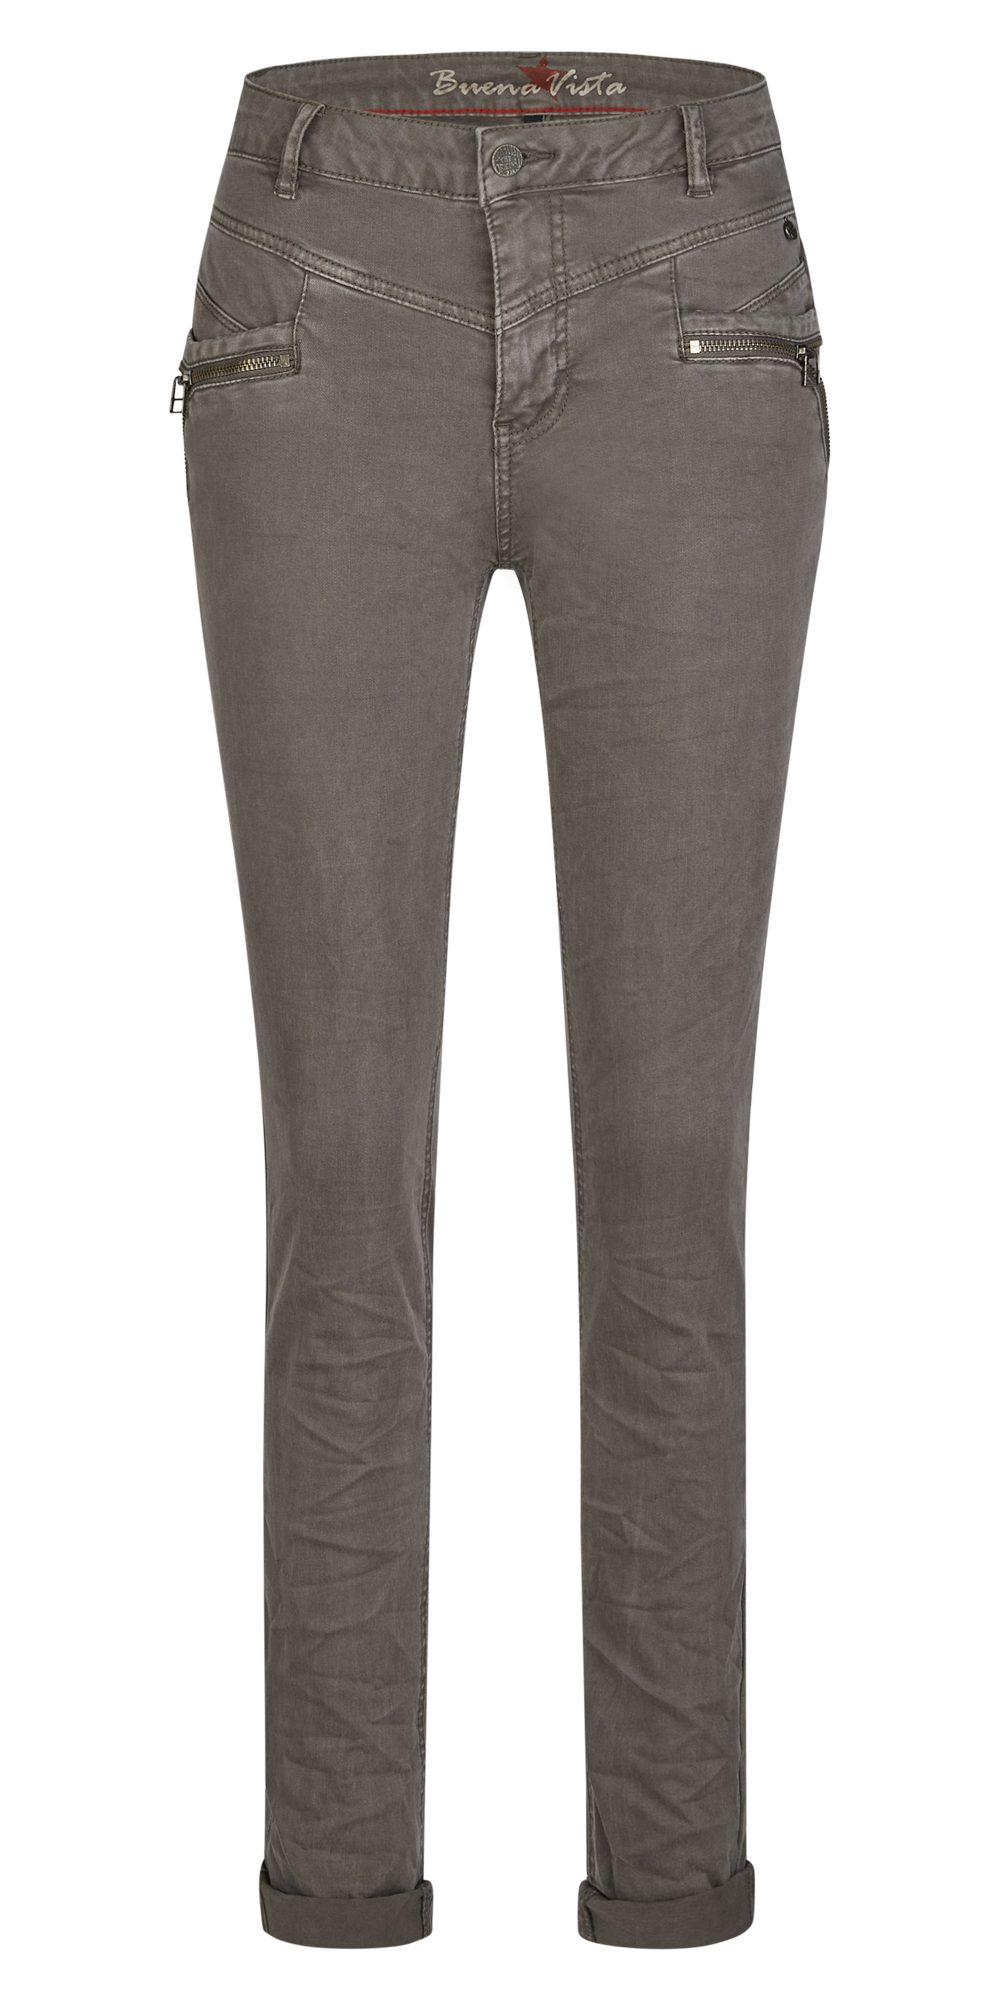 Buena Vista Bequeme Jeans 2986 dark grey | Skinny Jeans